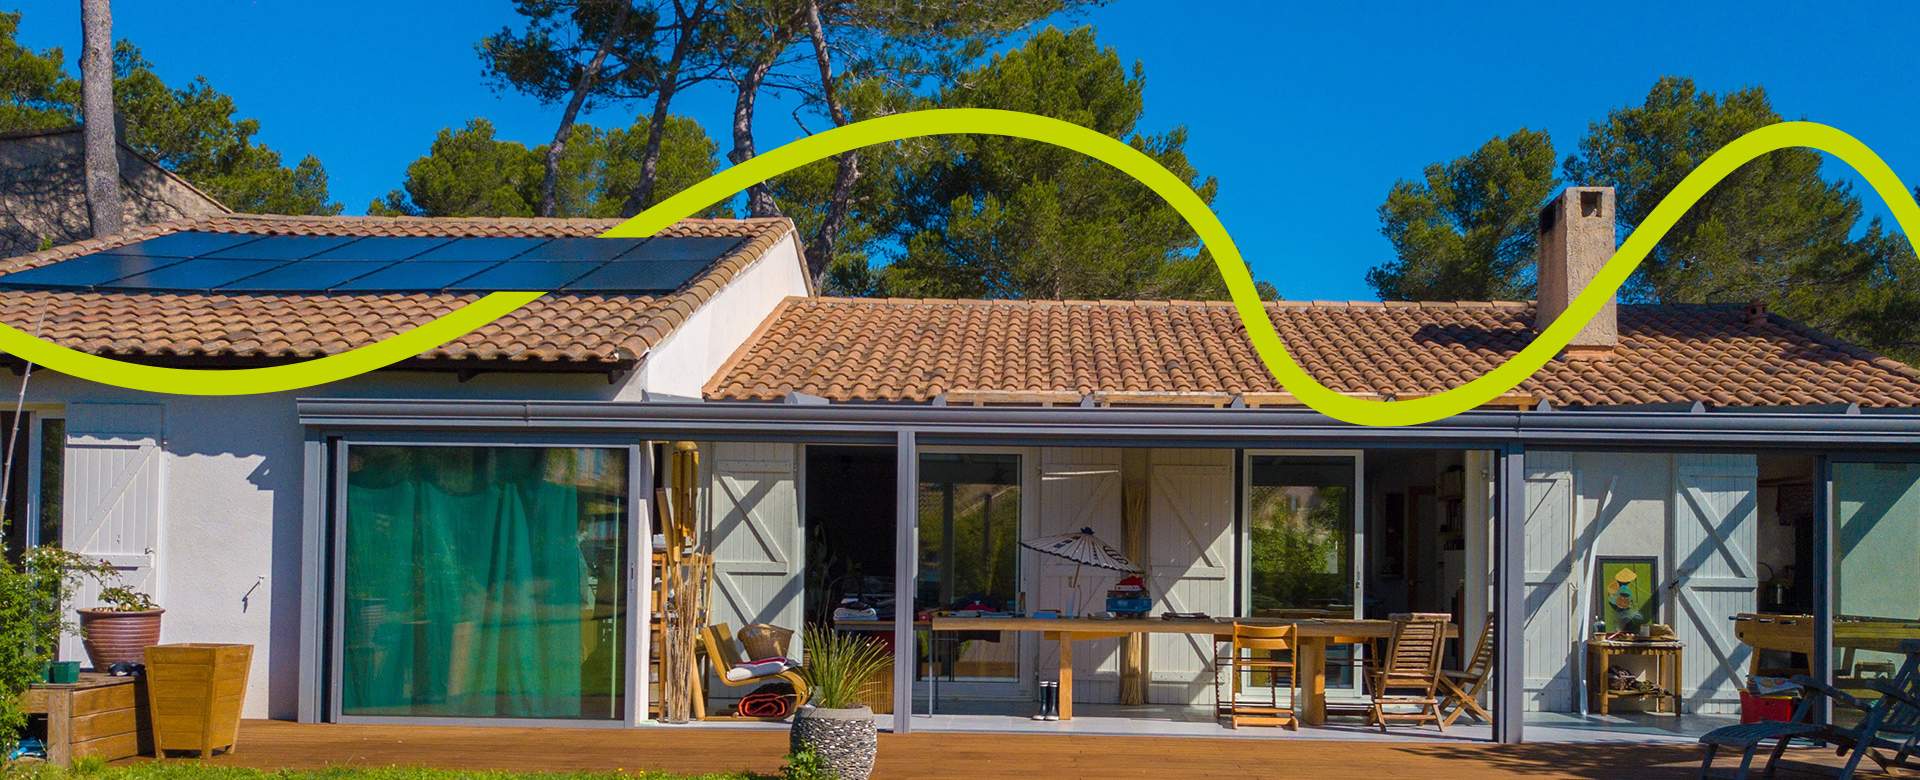 Anéo installation solution solaire hybride photovoltaïque Hérault 34 Gard 30